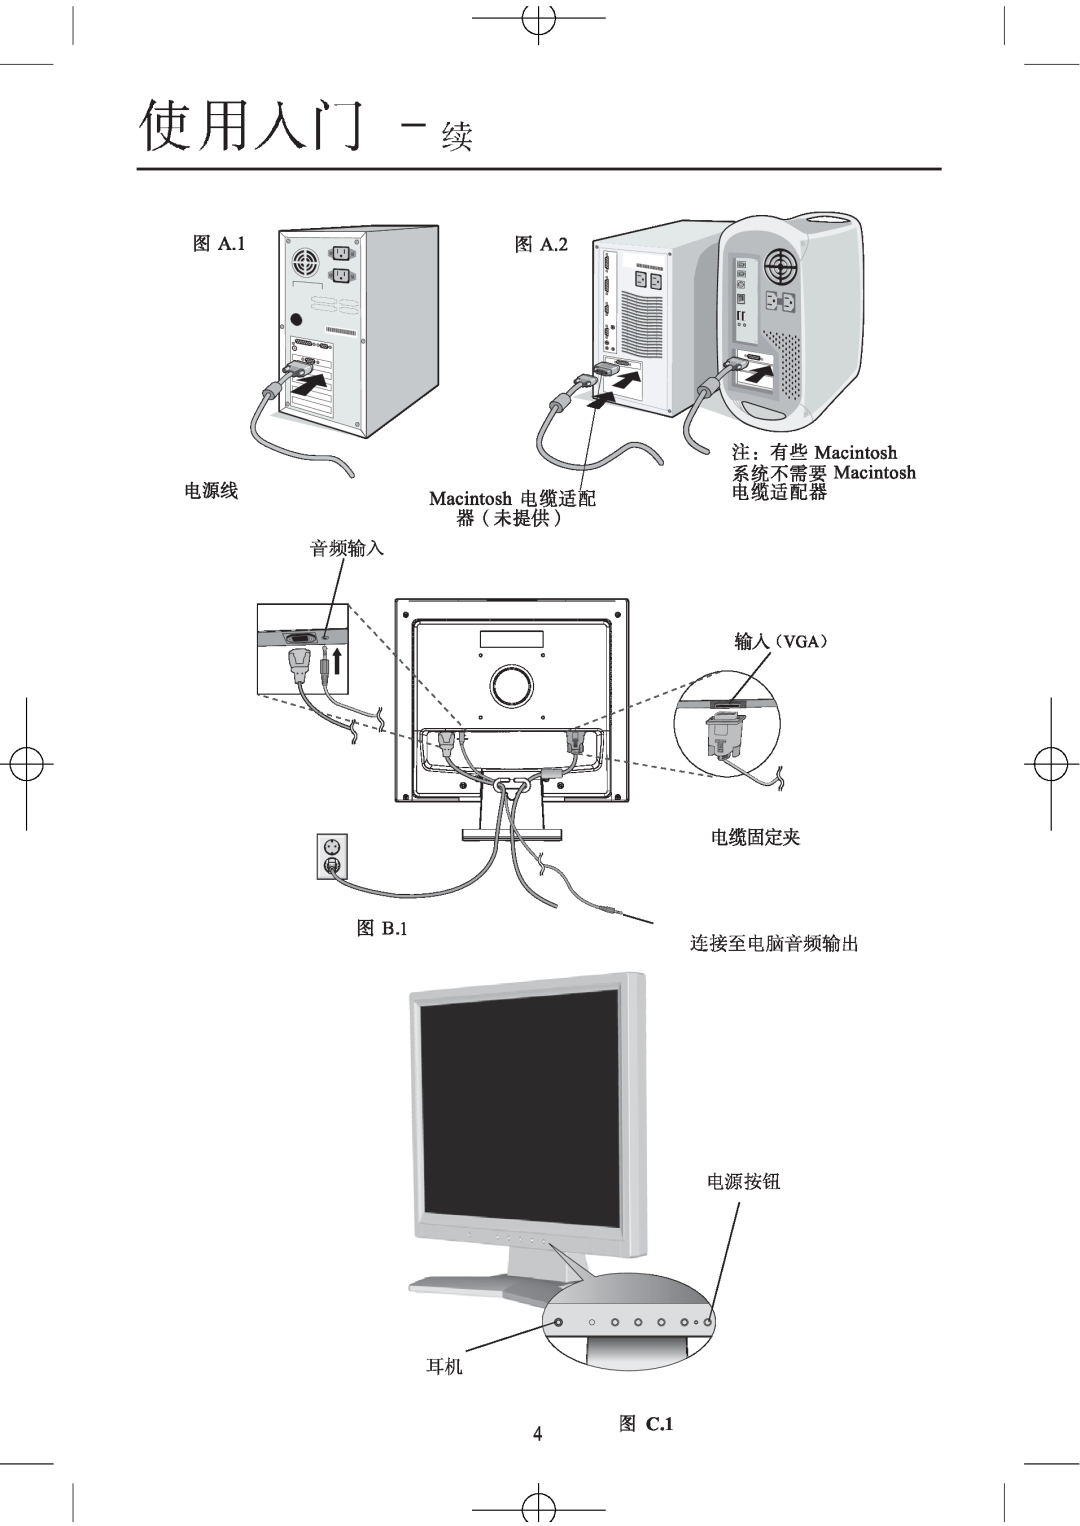 NEC LCD1904M, LCD1704M, LCD1504M manual 4 C.1 